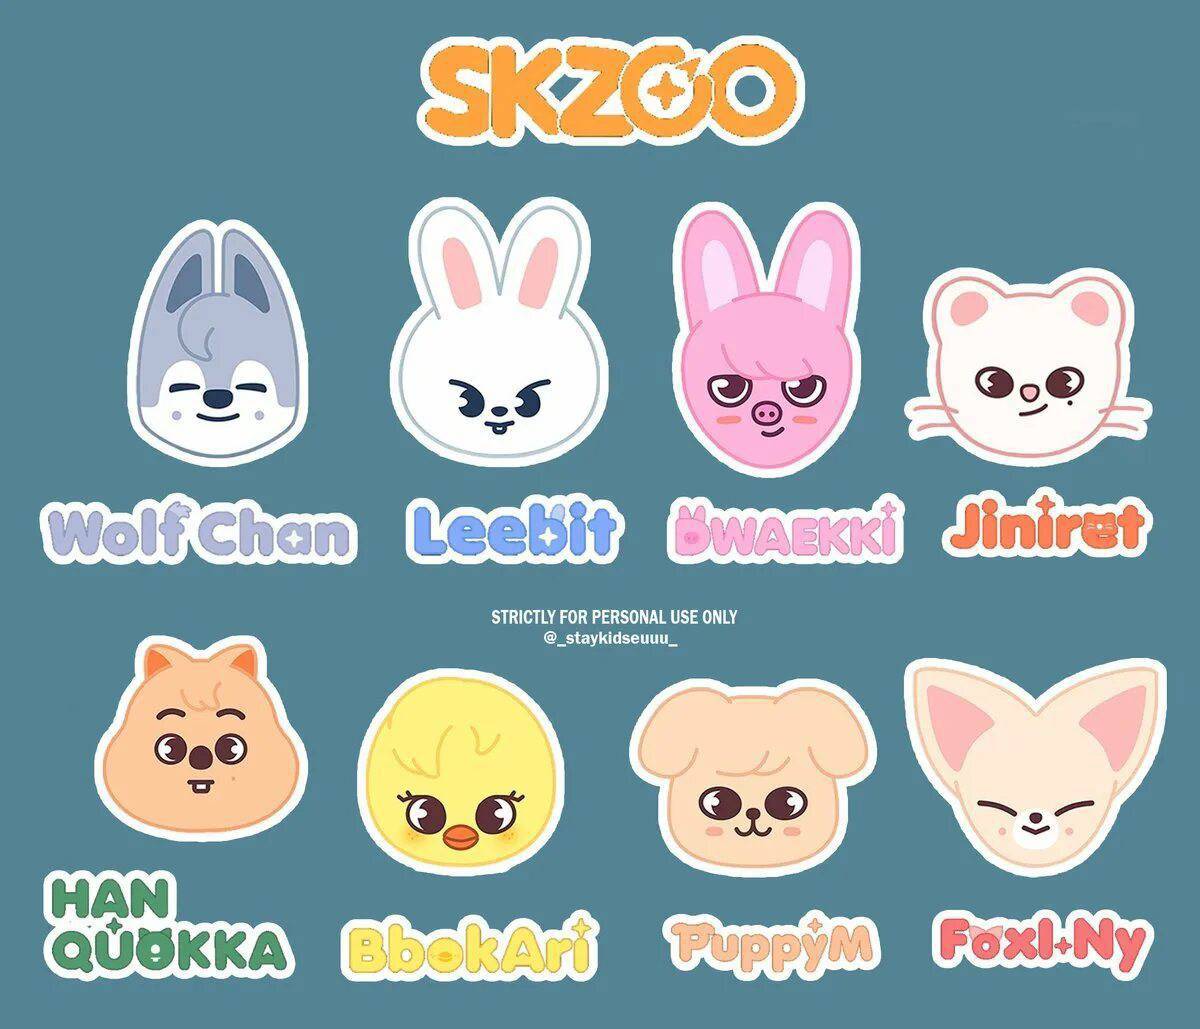 Skzoo #4